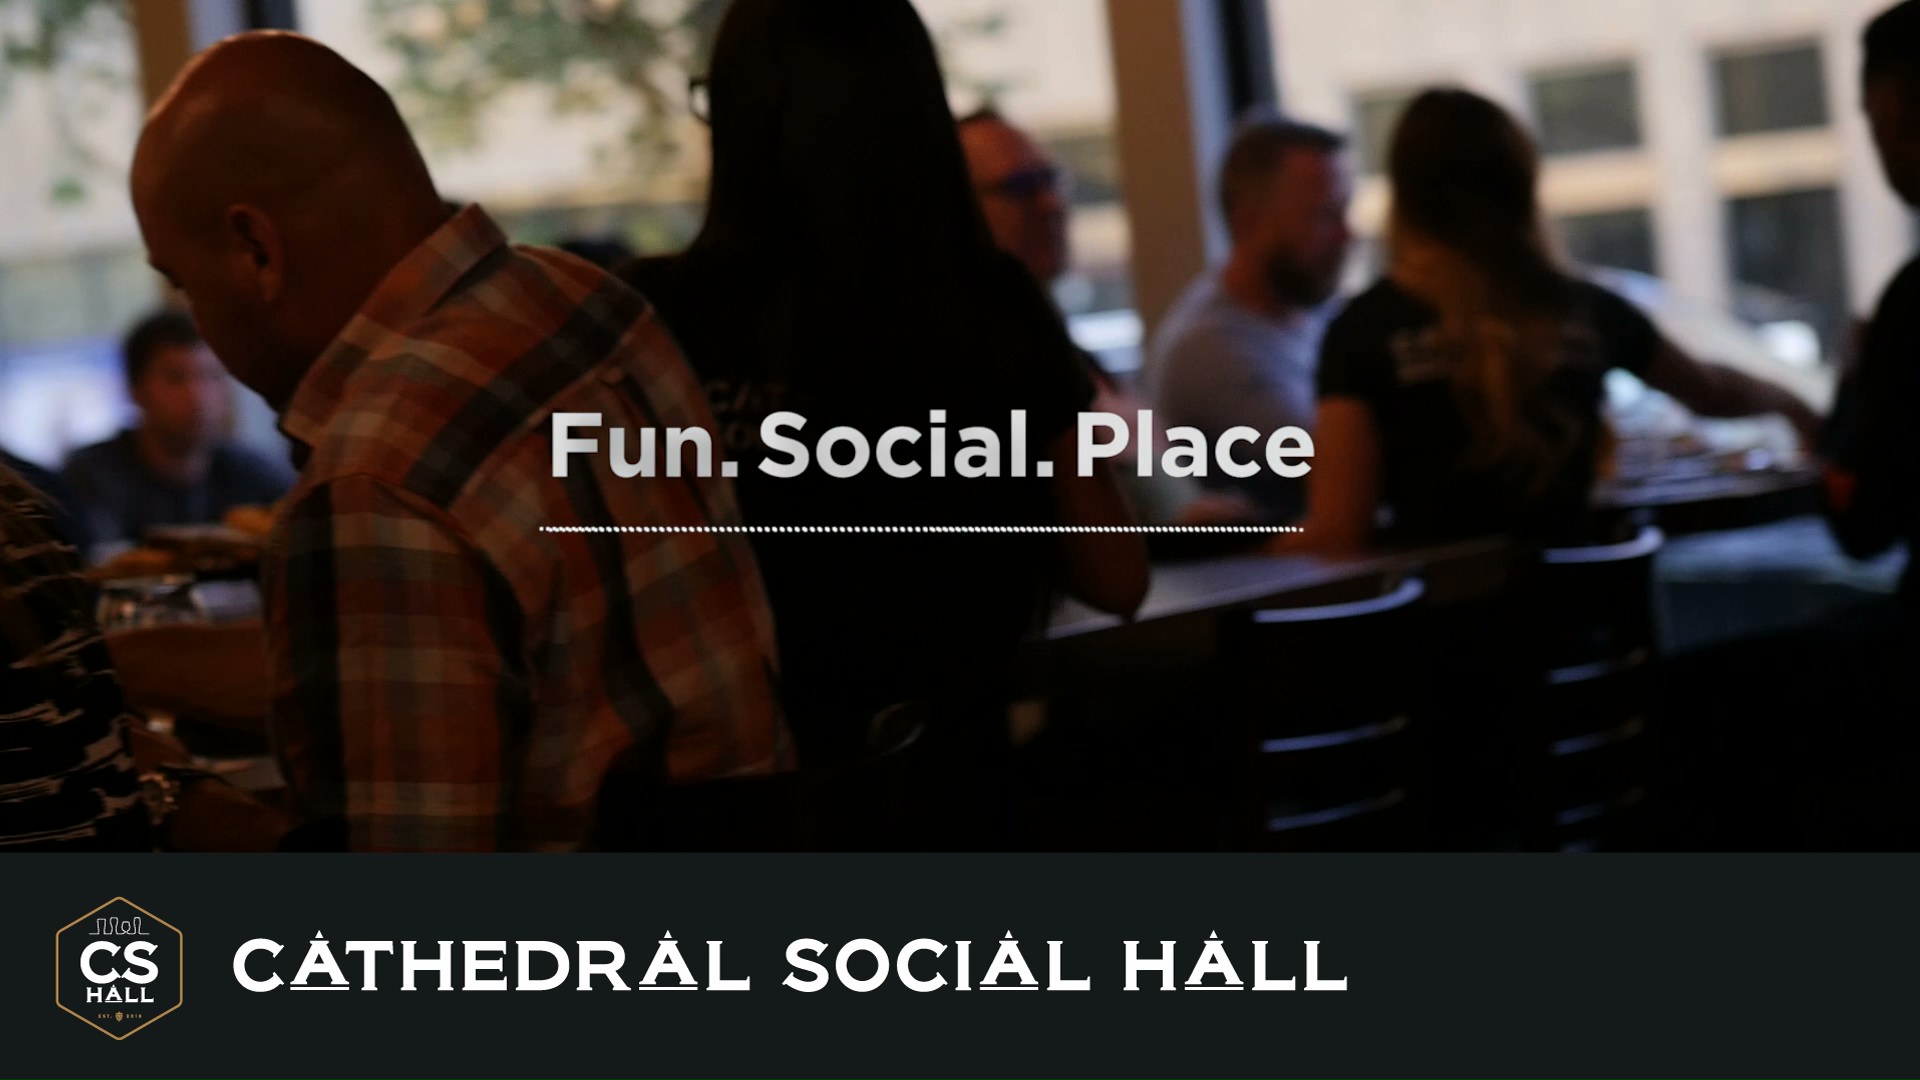 Cathedral Social Hall, Social, Cathedral Social Hall - Team - Brittany, Portfolio Image, Fun. Social. Place